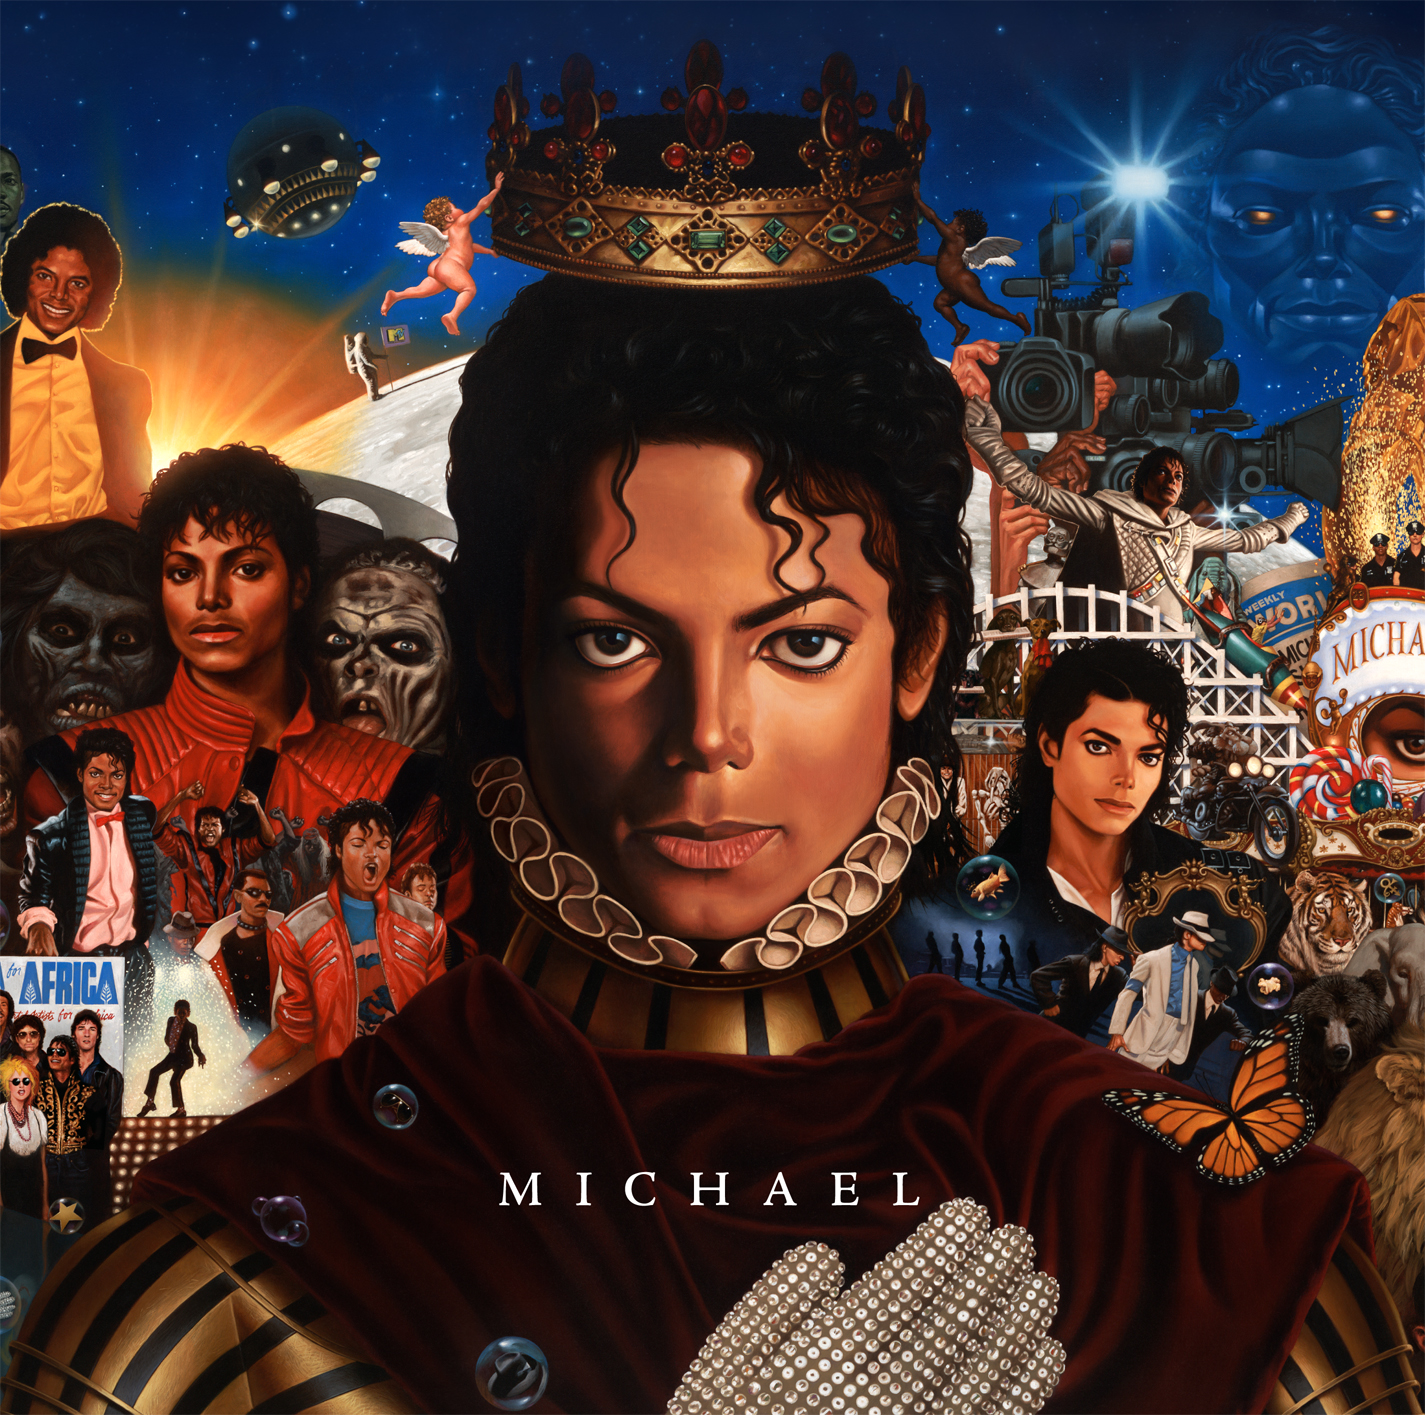 Michael Jackson's Thriller (music video) - Wikipedia